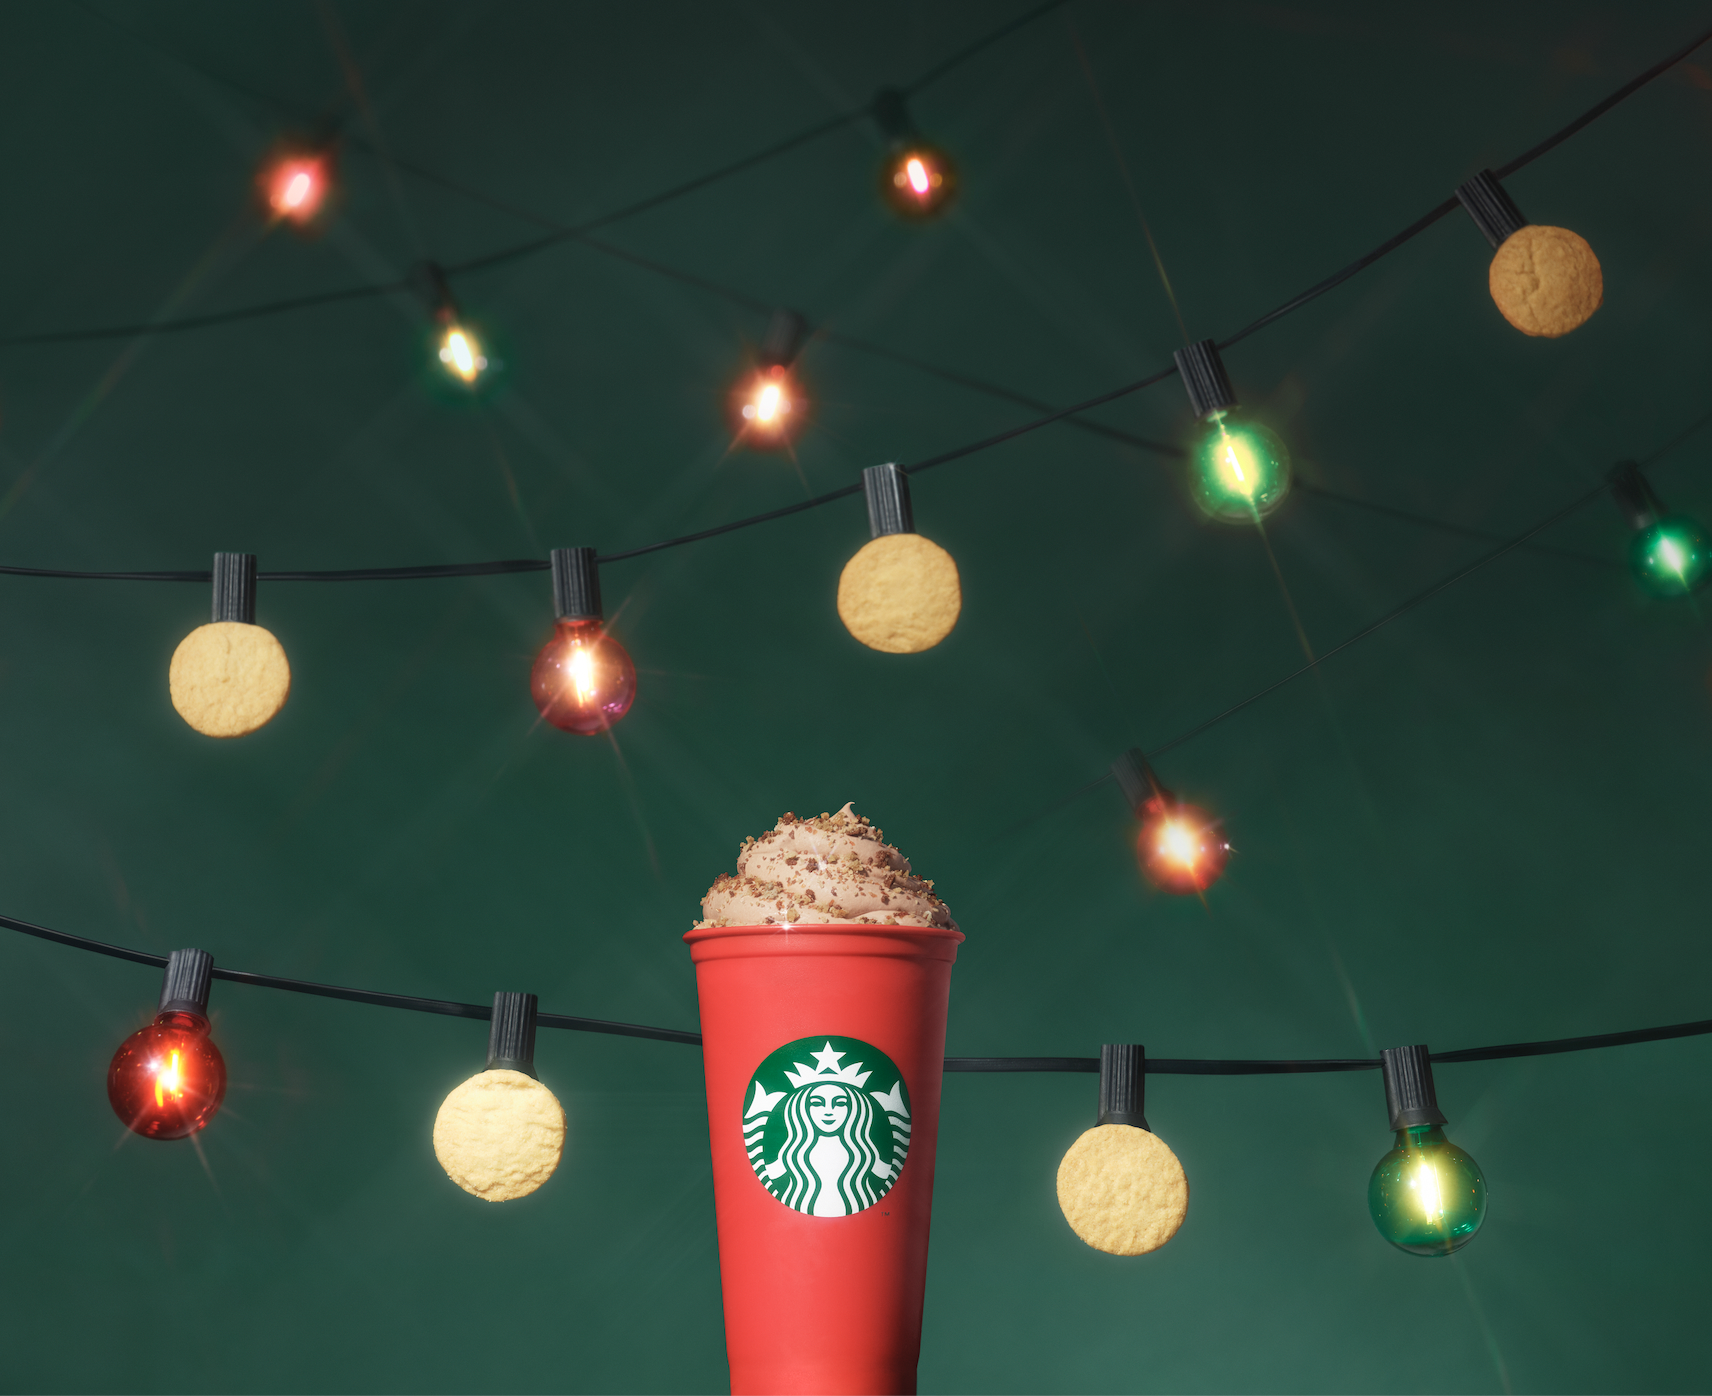 Starbucks 2023 Christmas menu: The festive menu